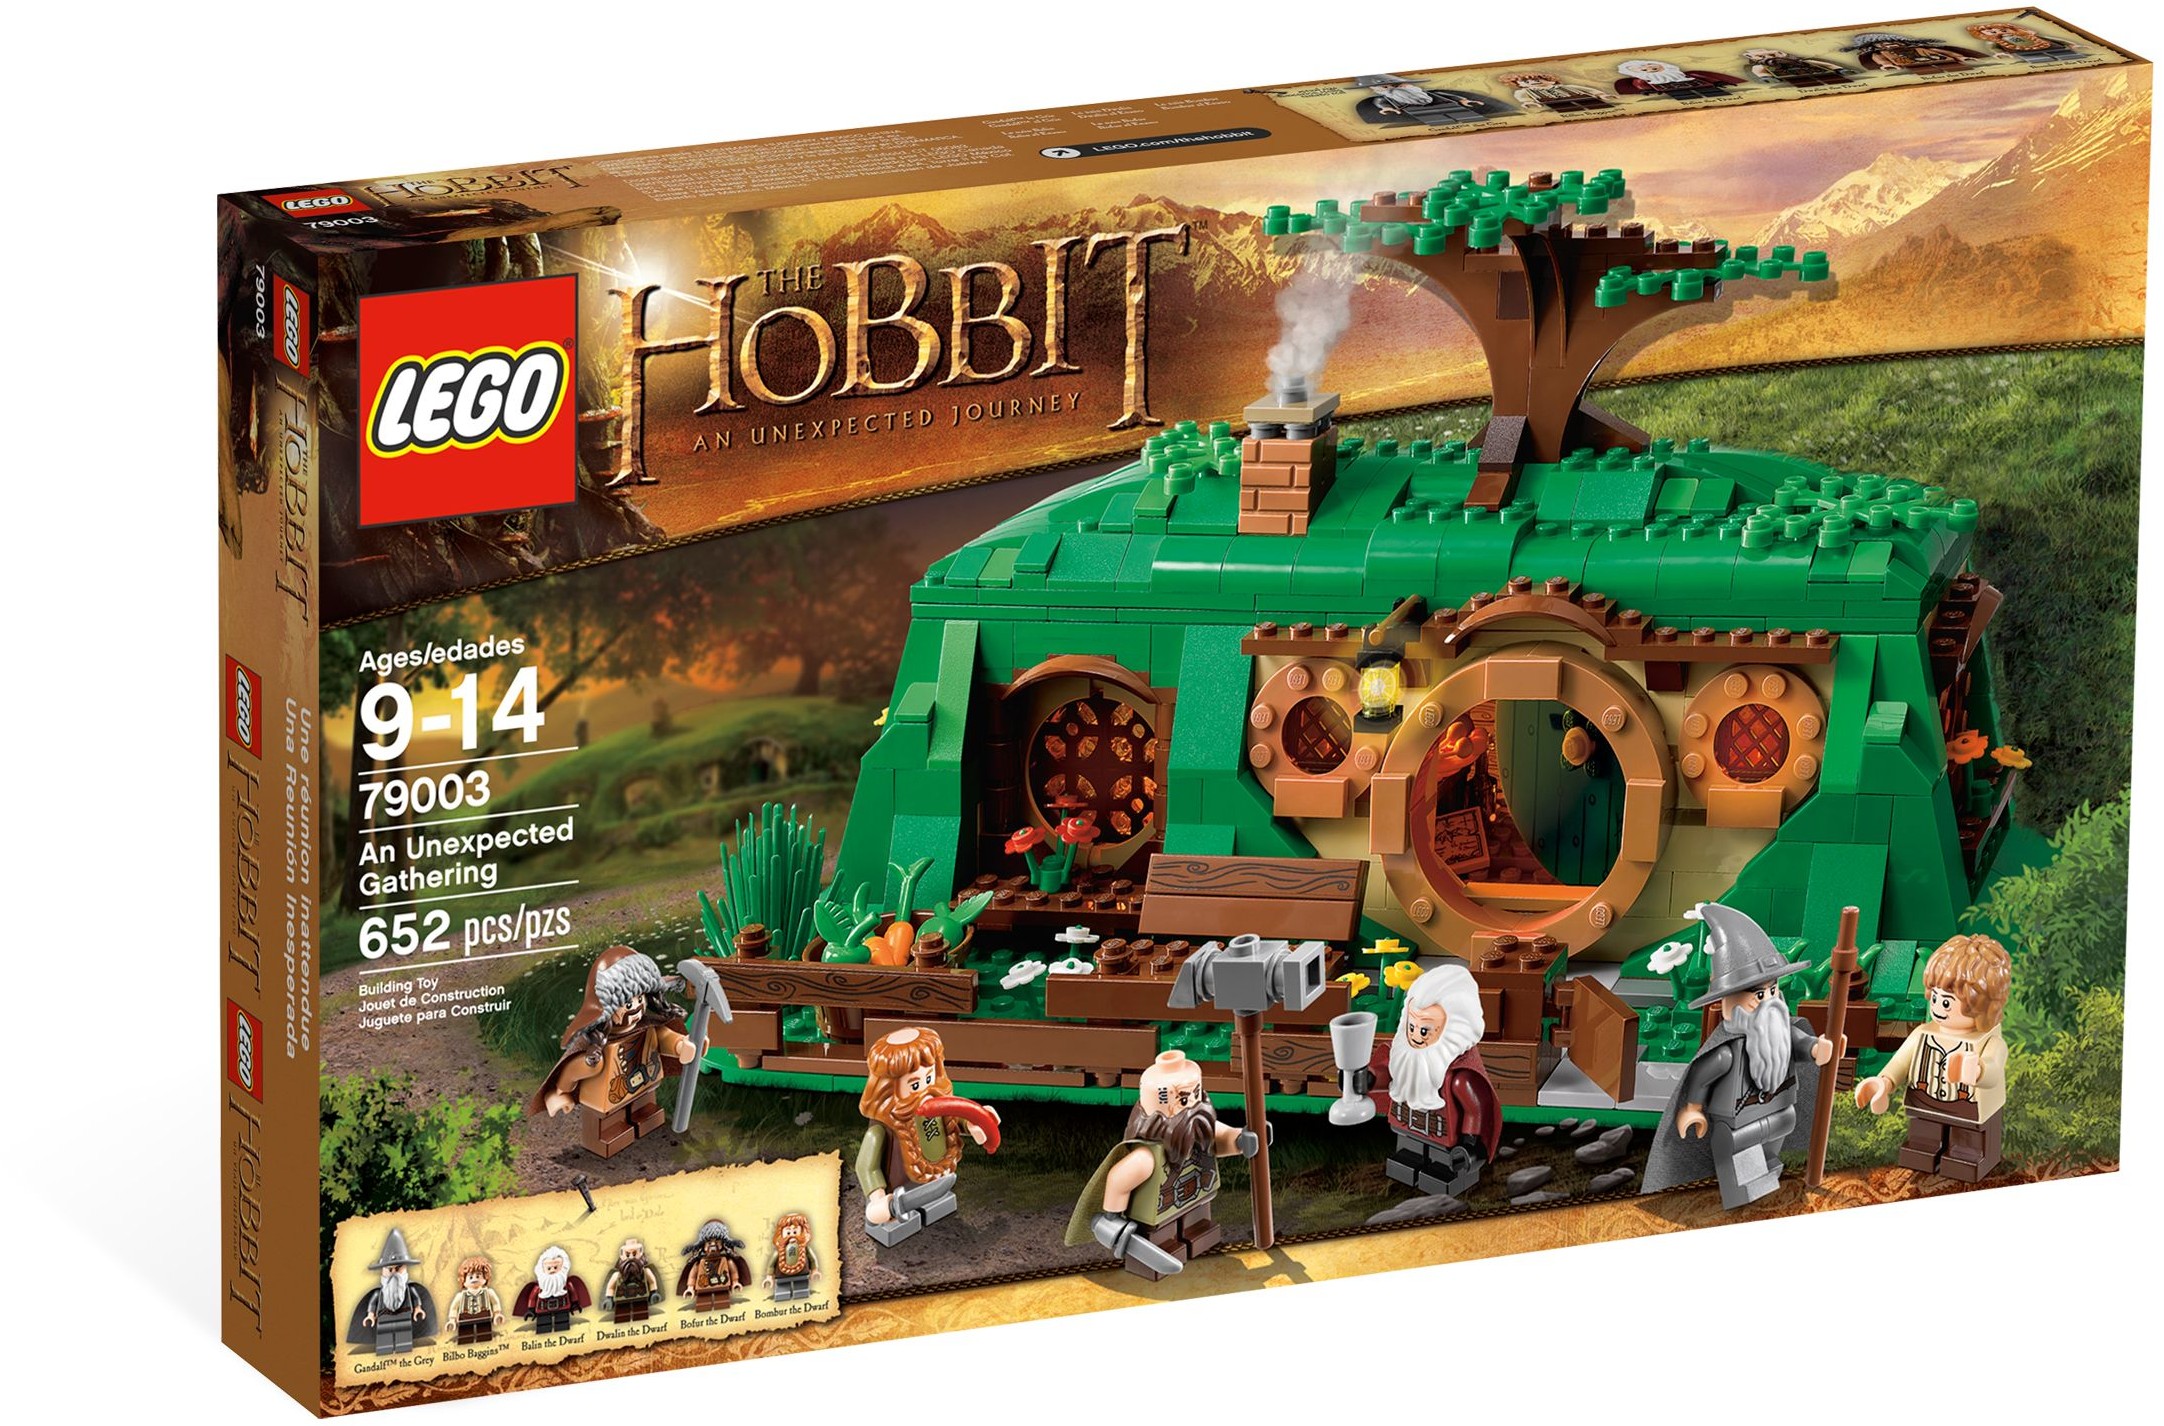 79003 LEGO Hobbit